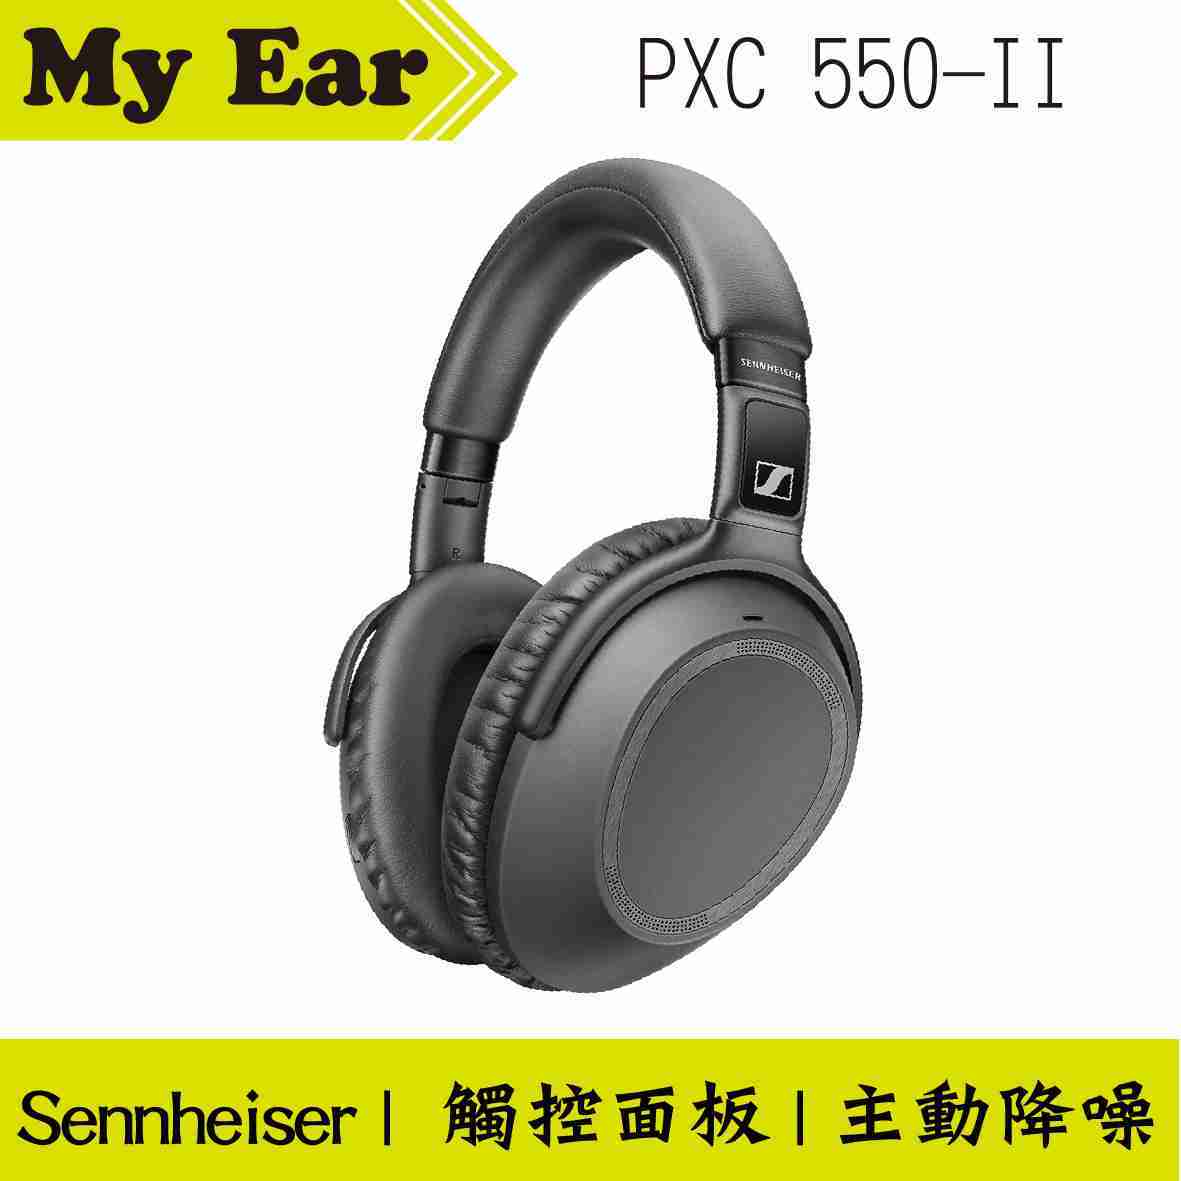 Sennheiser 森海塞爾 PXC 550-II 主動降噪 耳罩耳機 | My Ear耳機專門店